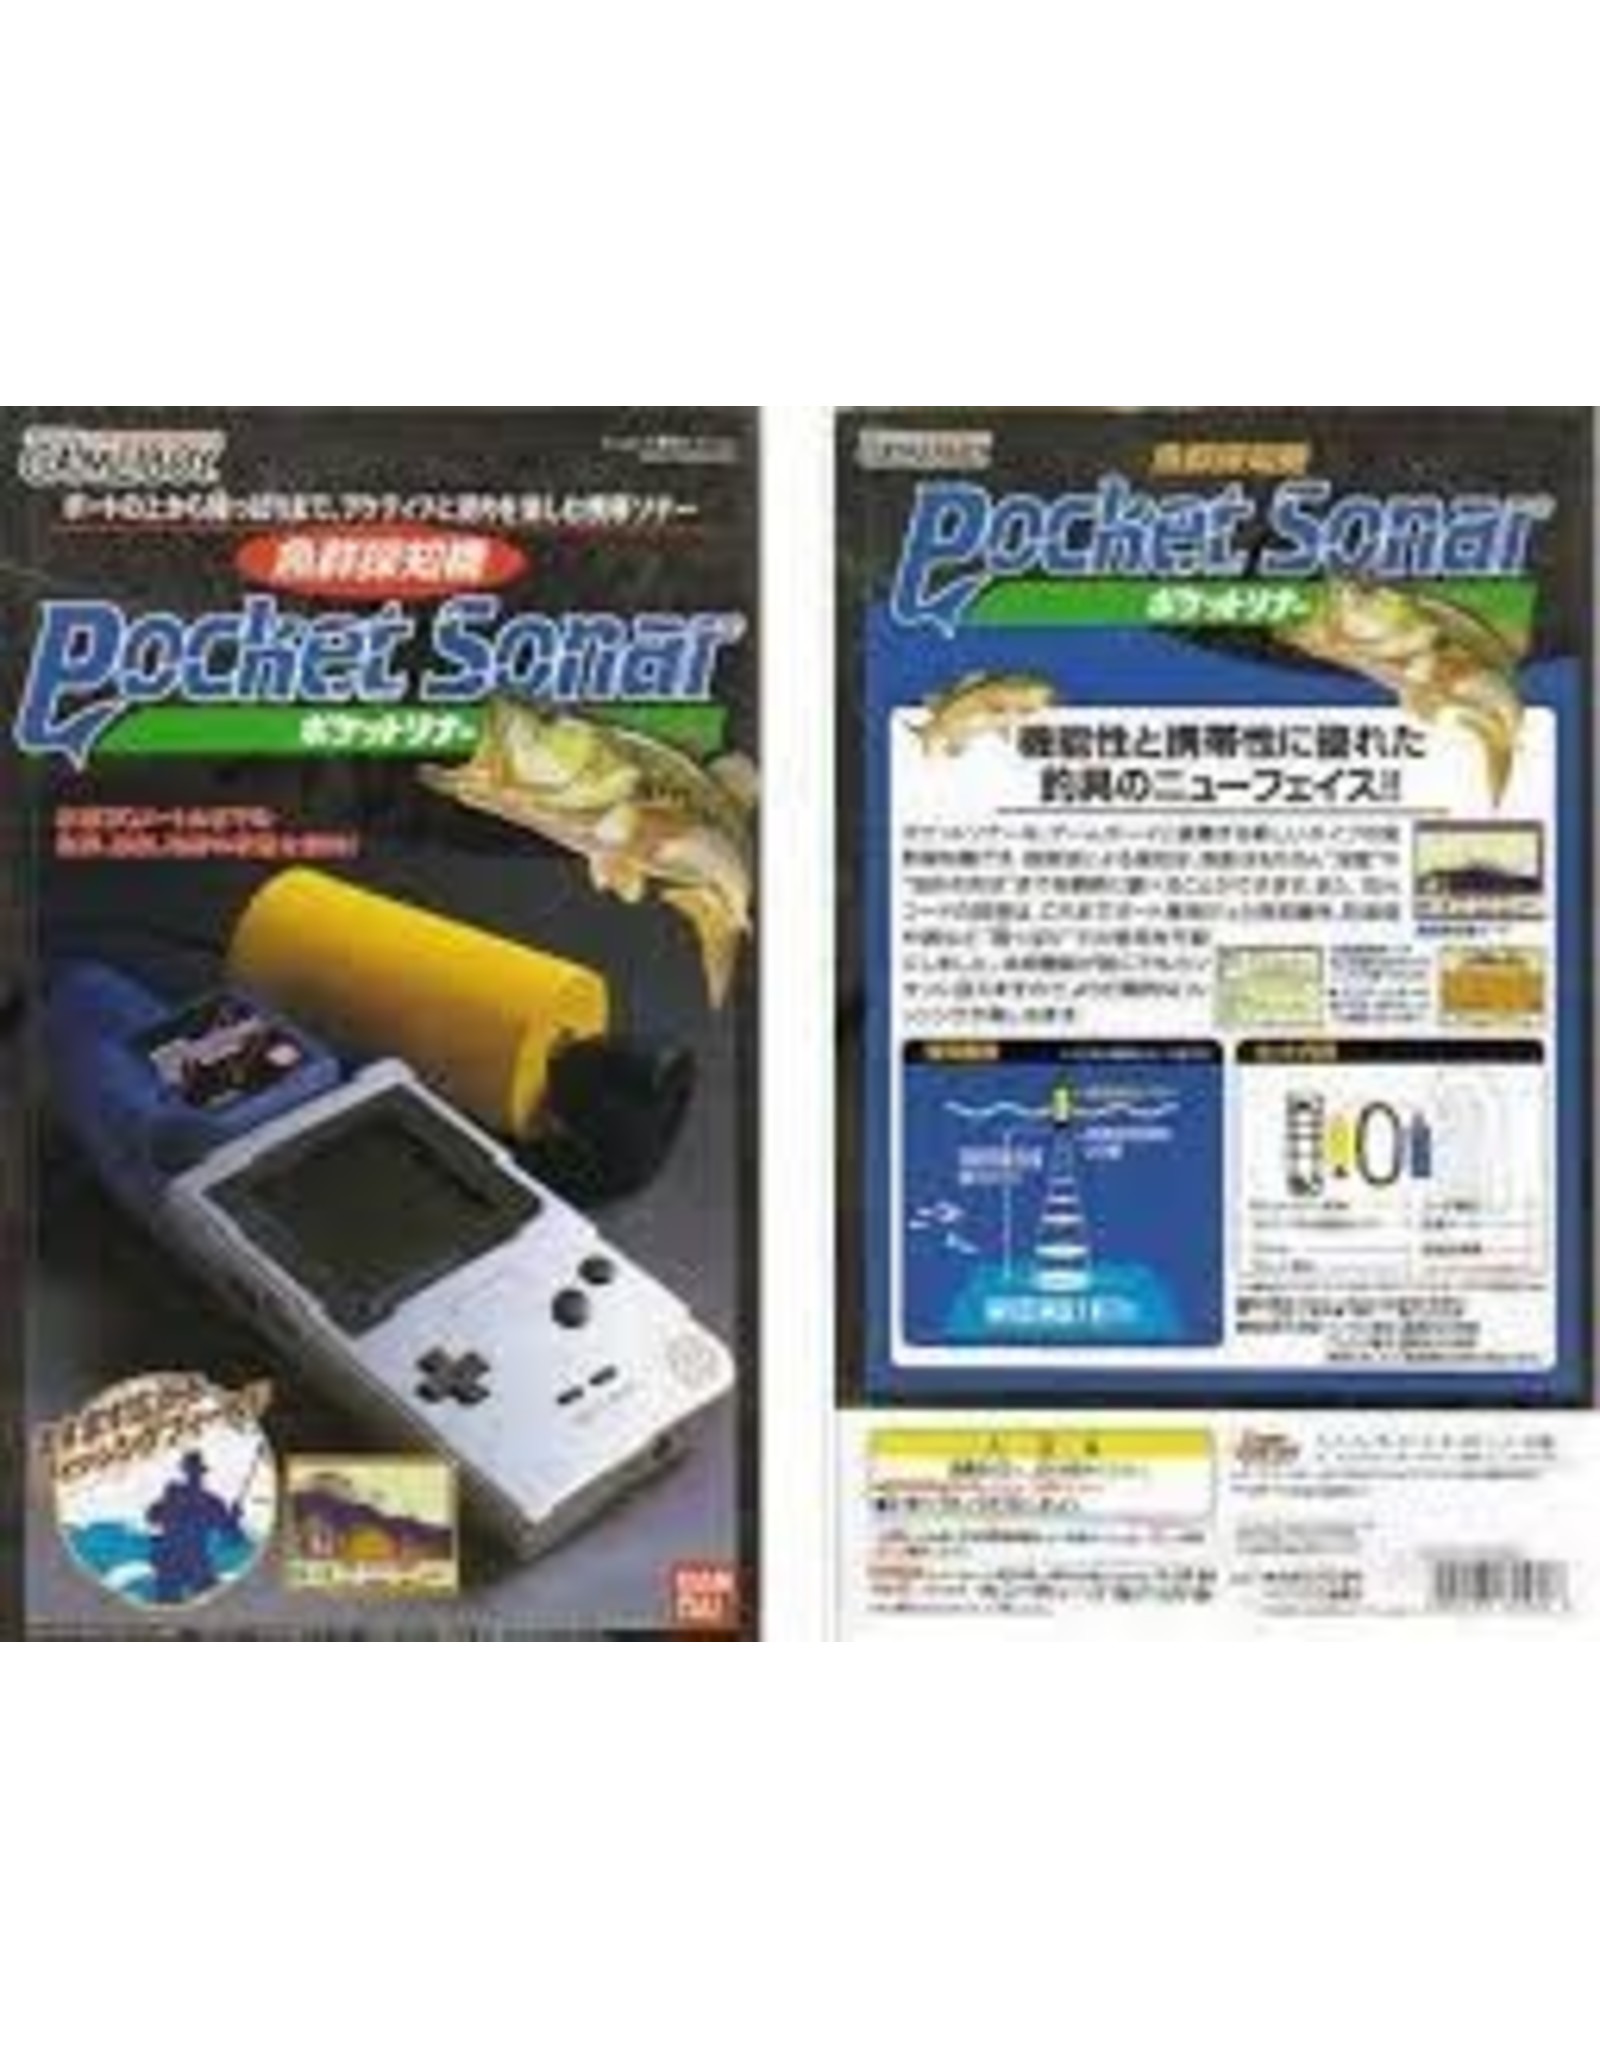 Game Boy Pocket Sonar (CiB) - Video Game Trader